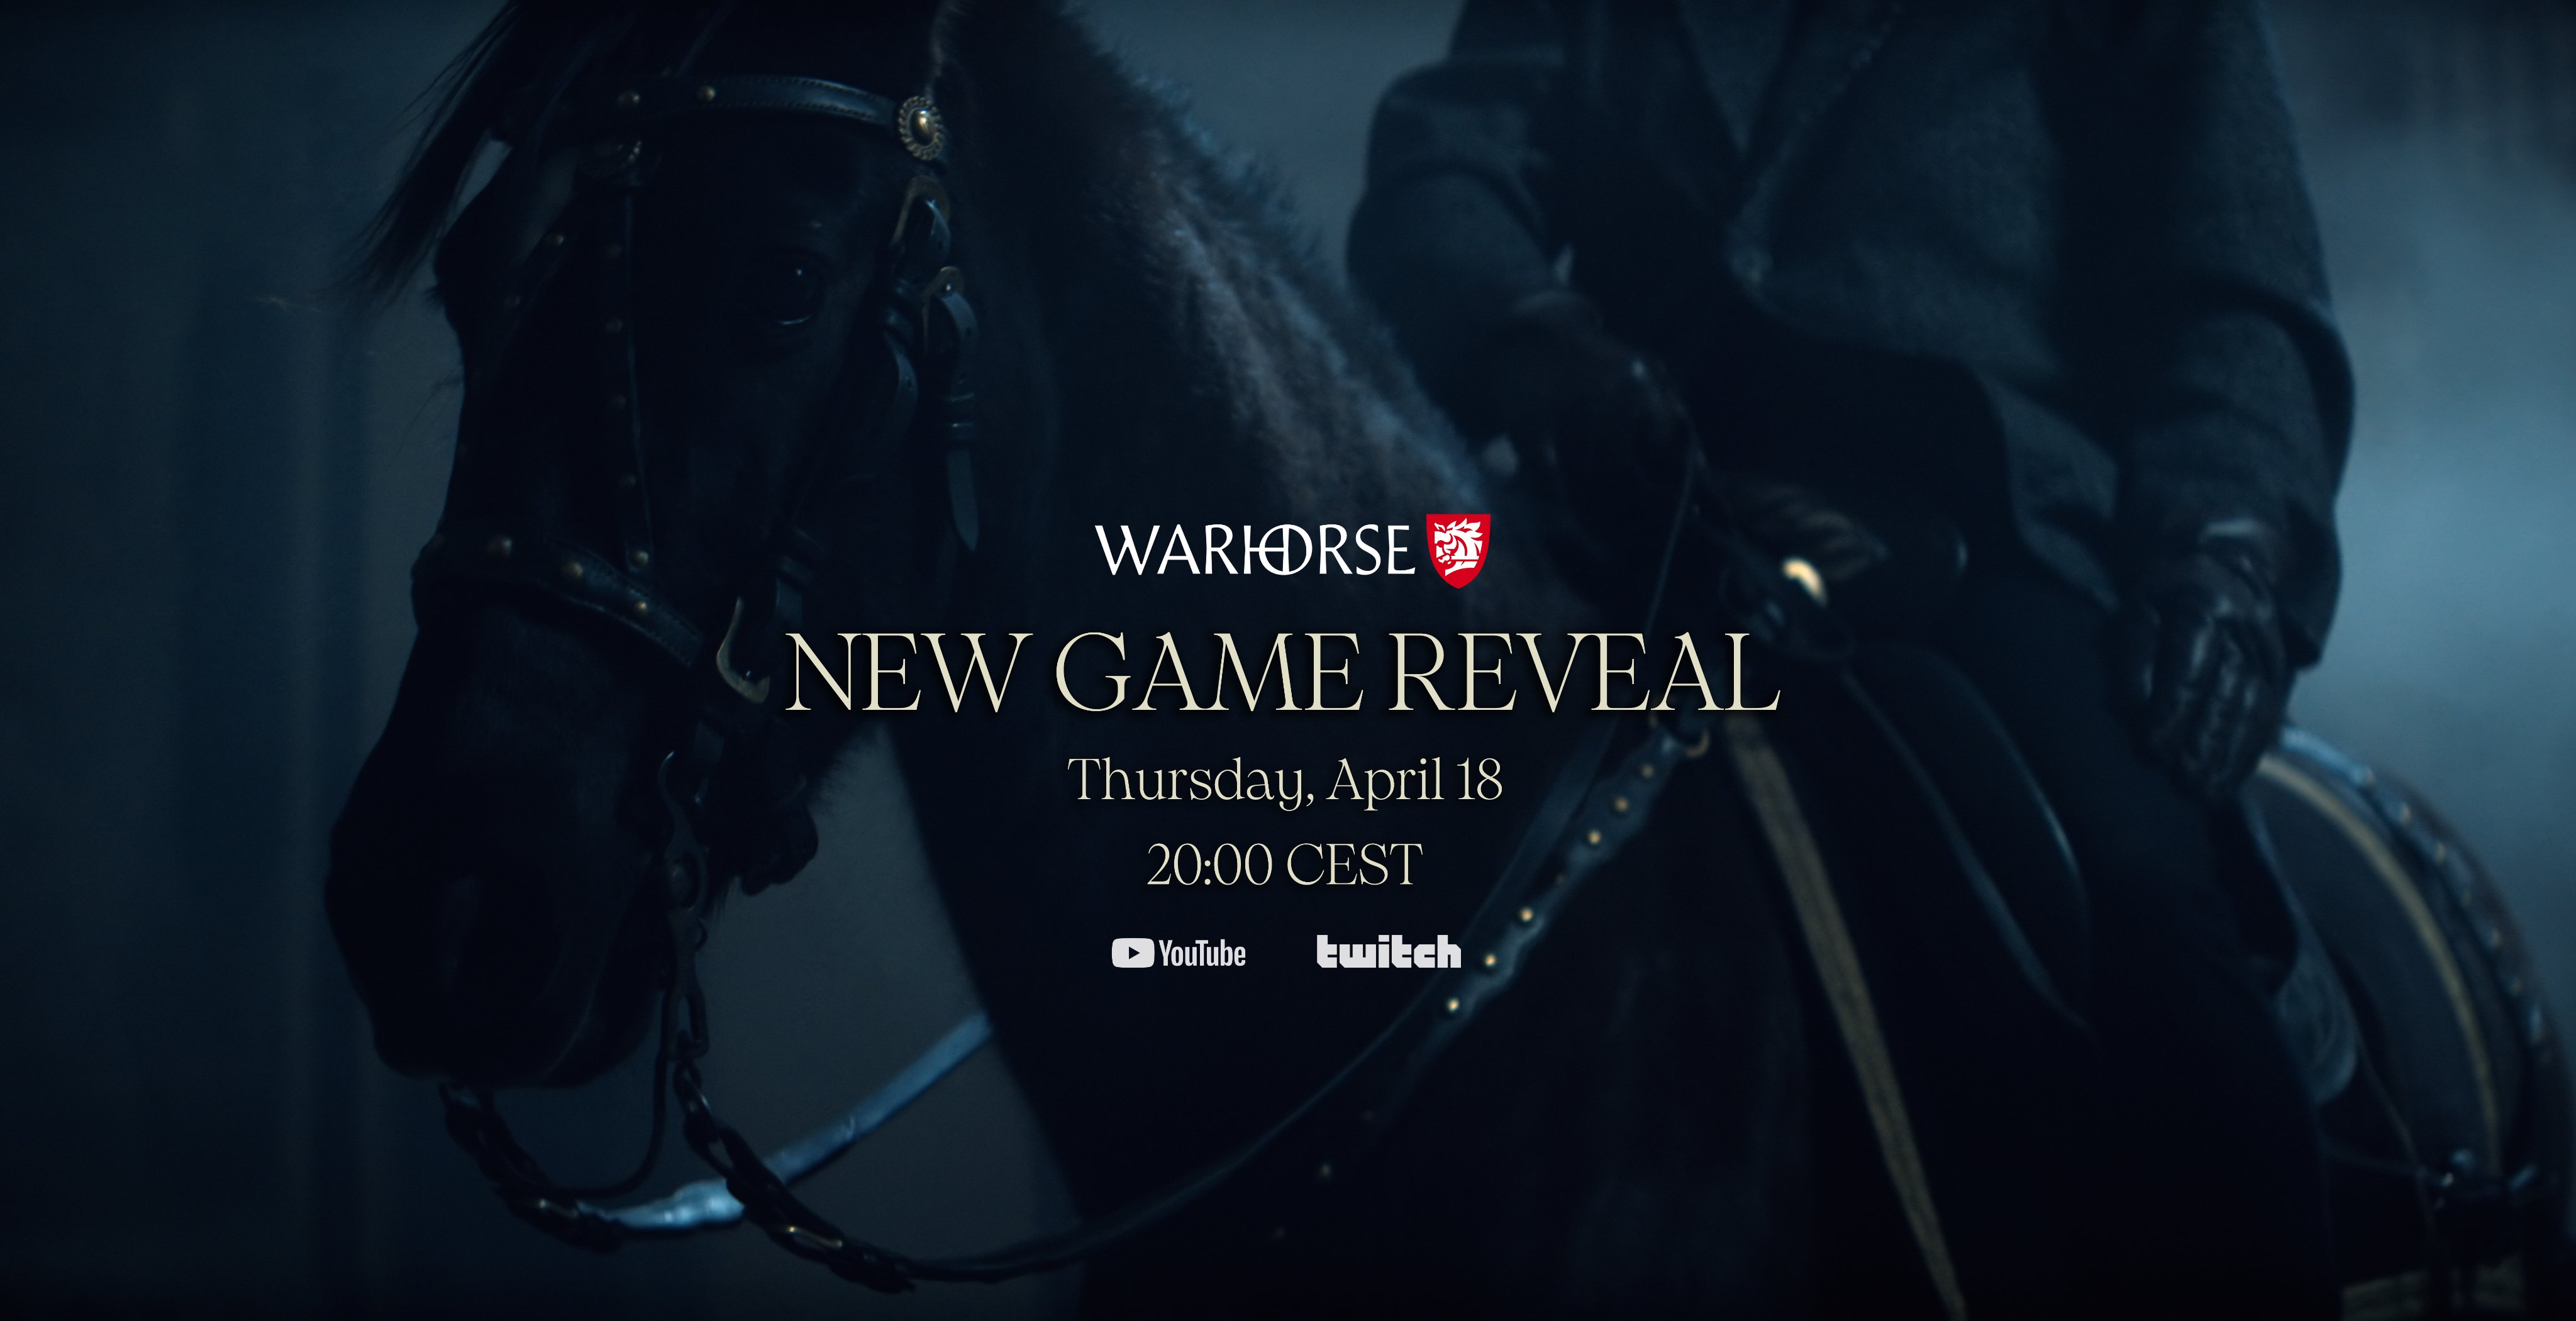 Warhorse анонсирует новую игру 18 апреля — скорее всего Kingdom Come 2